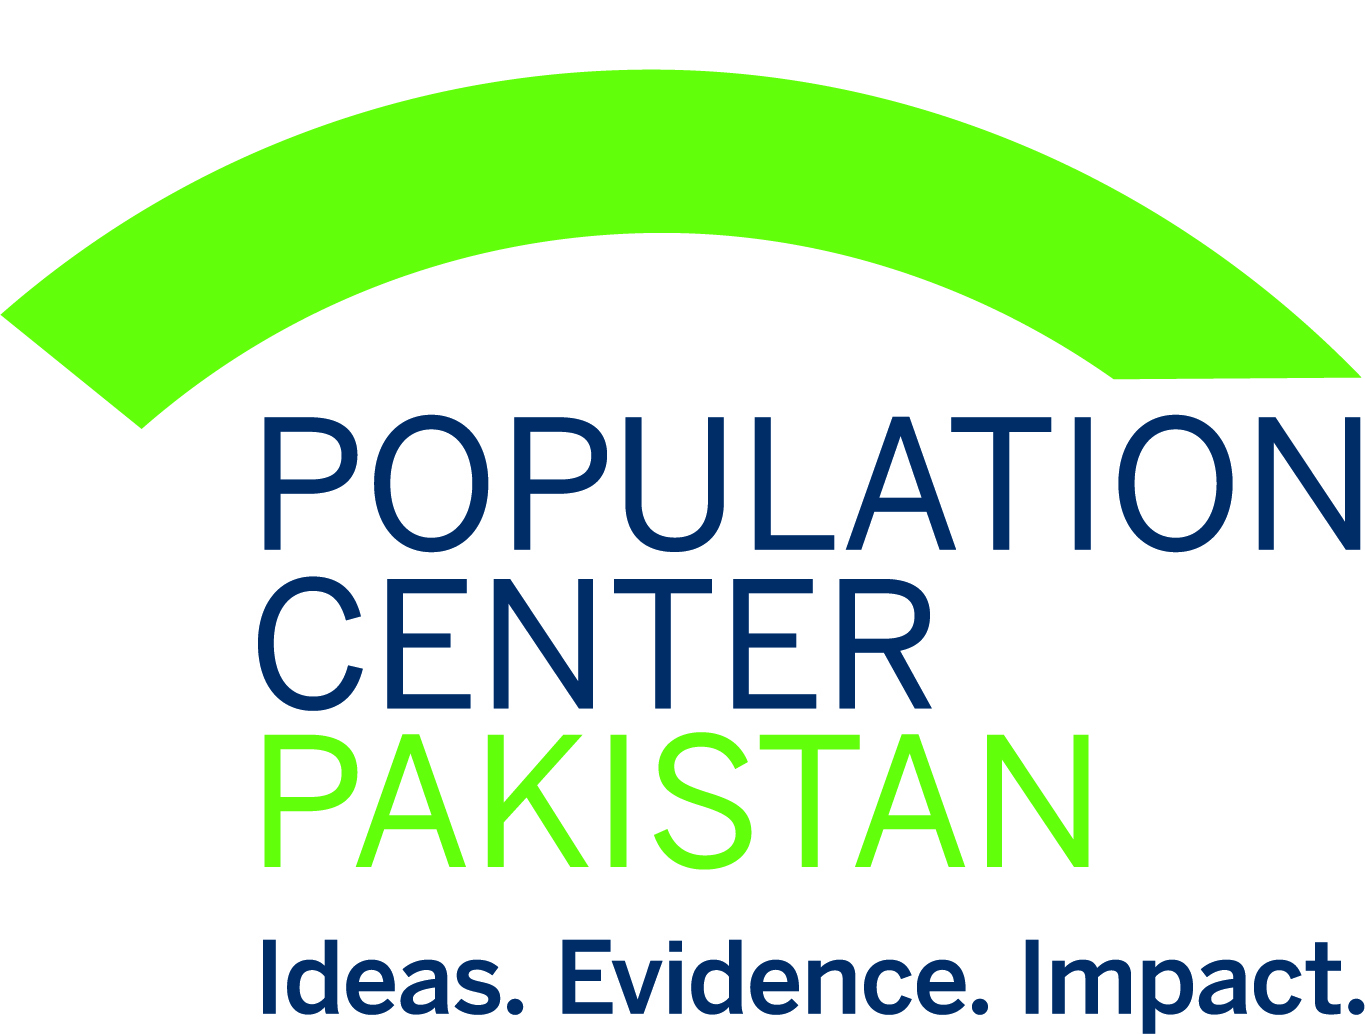 Population Center Pakistan logo Ideas. Evidence. Impact.